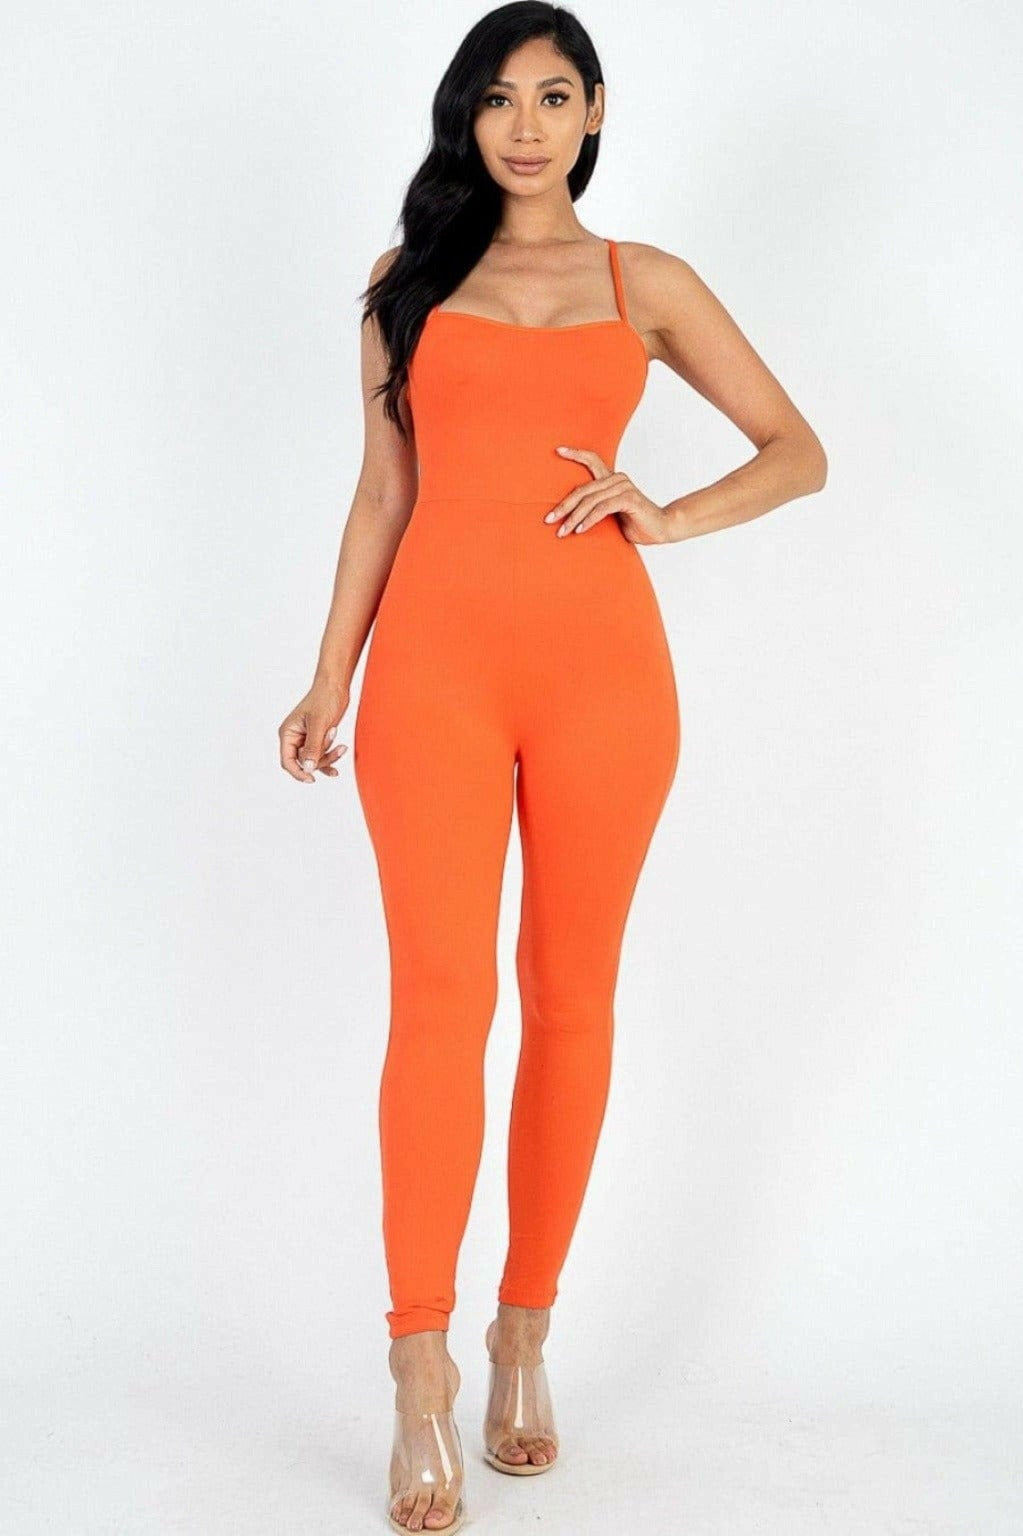 Epicplacess jumpsuits SMALL / Orange / UNITED STATES CRISS Women's  Linen Cotton Jumpsuits UJP-843